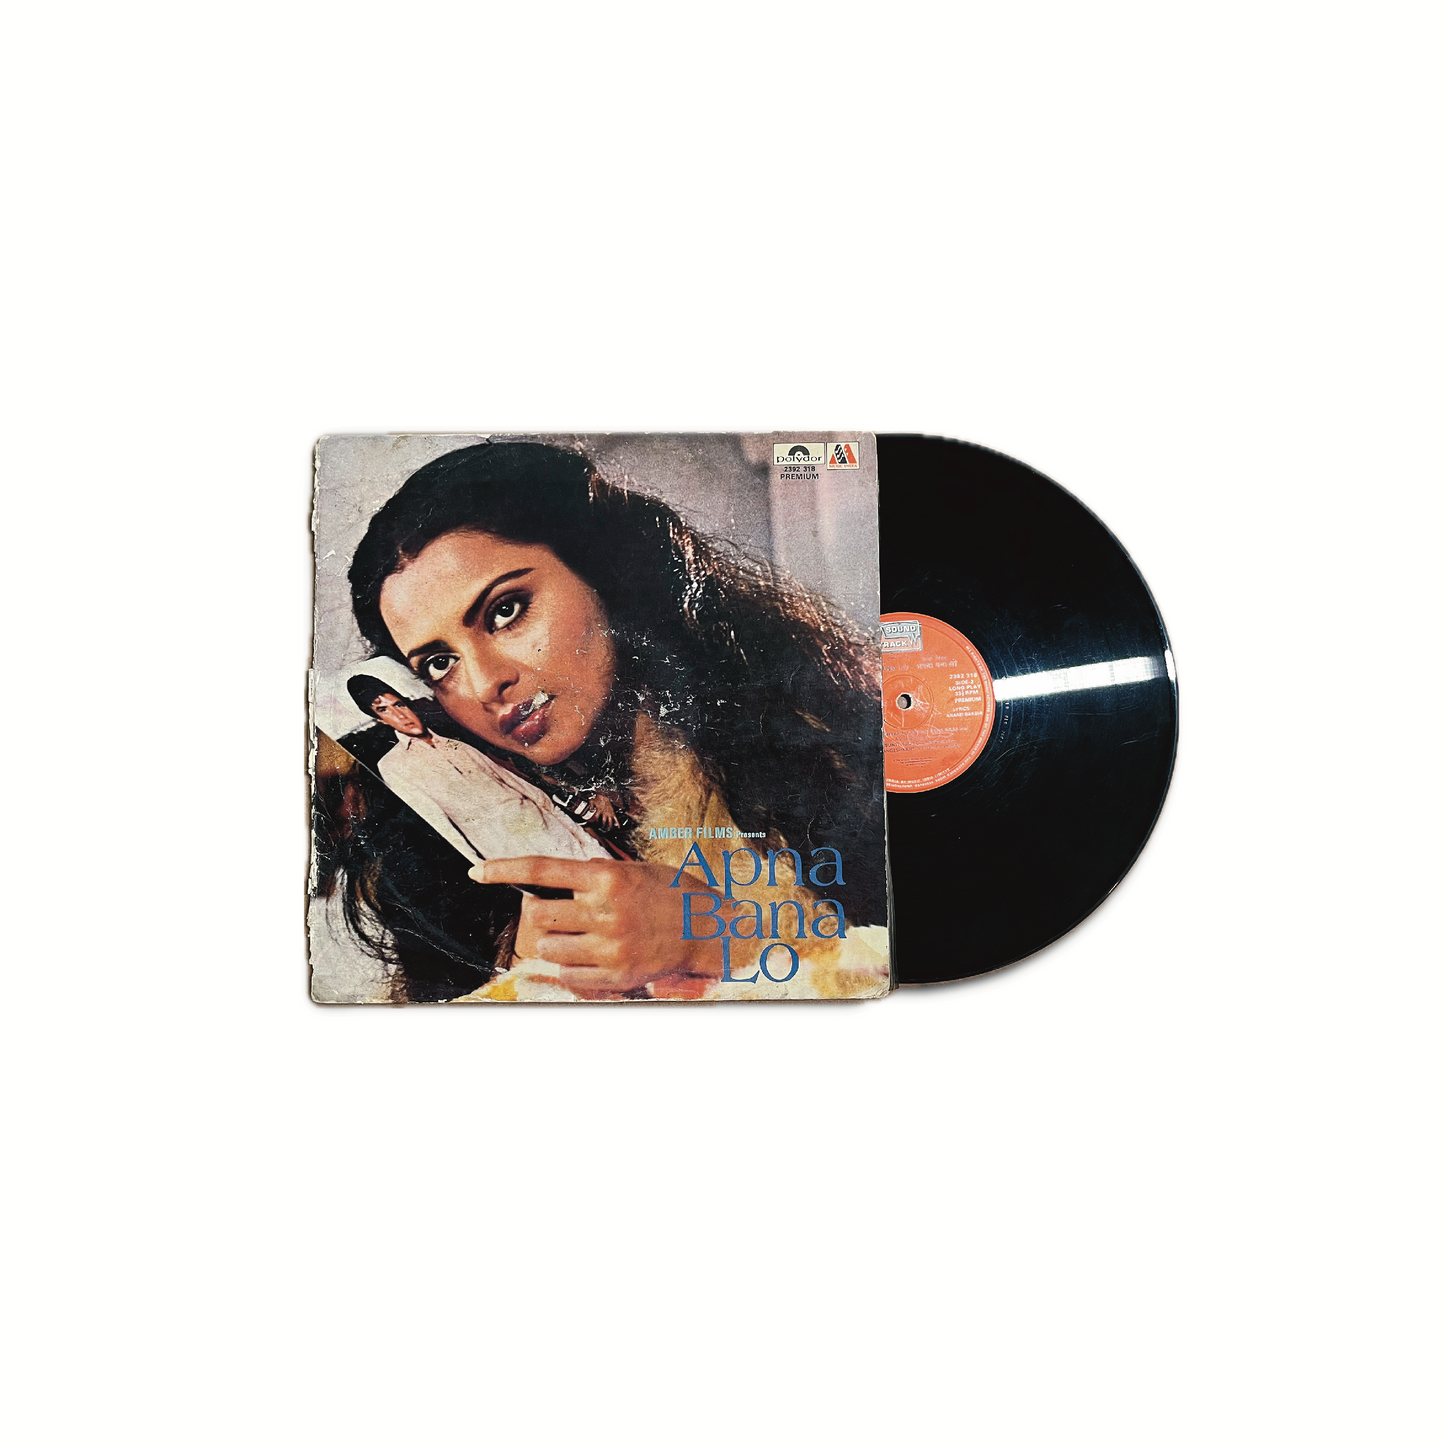 'APNA BANA LO' - VINTAGE VINYL LP RECORD 1982